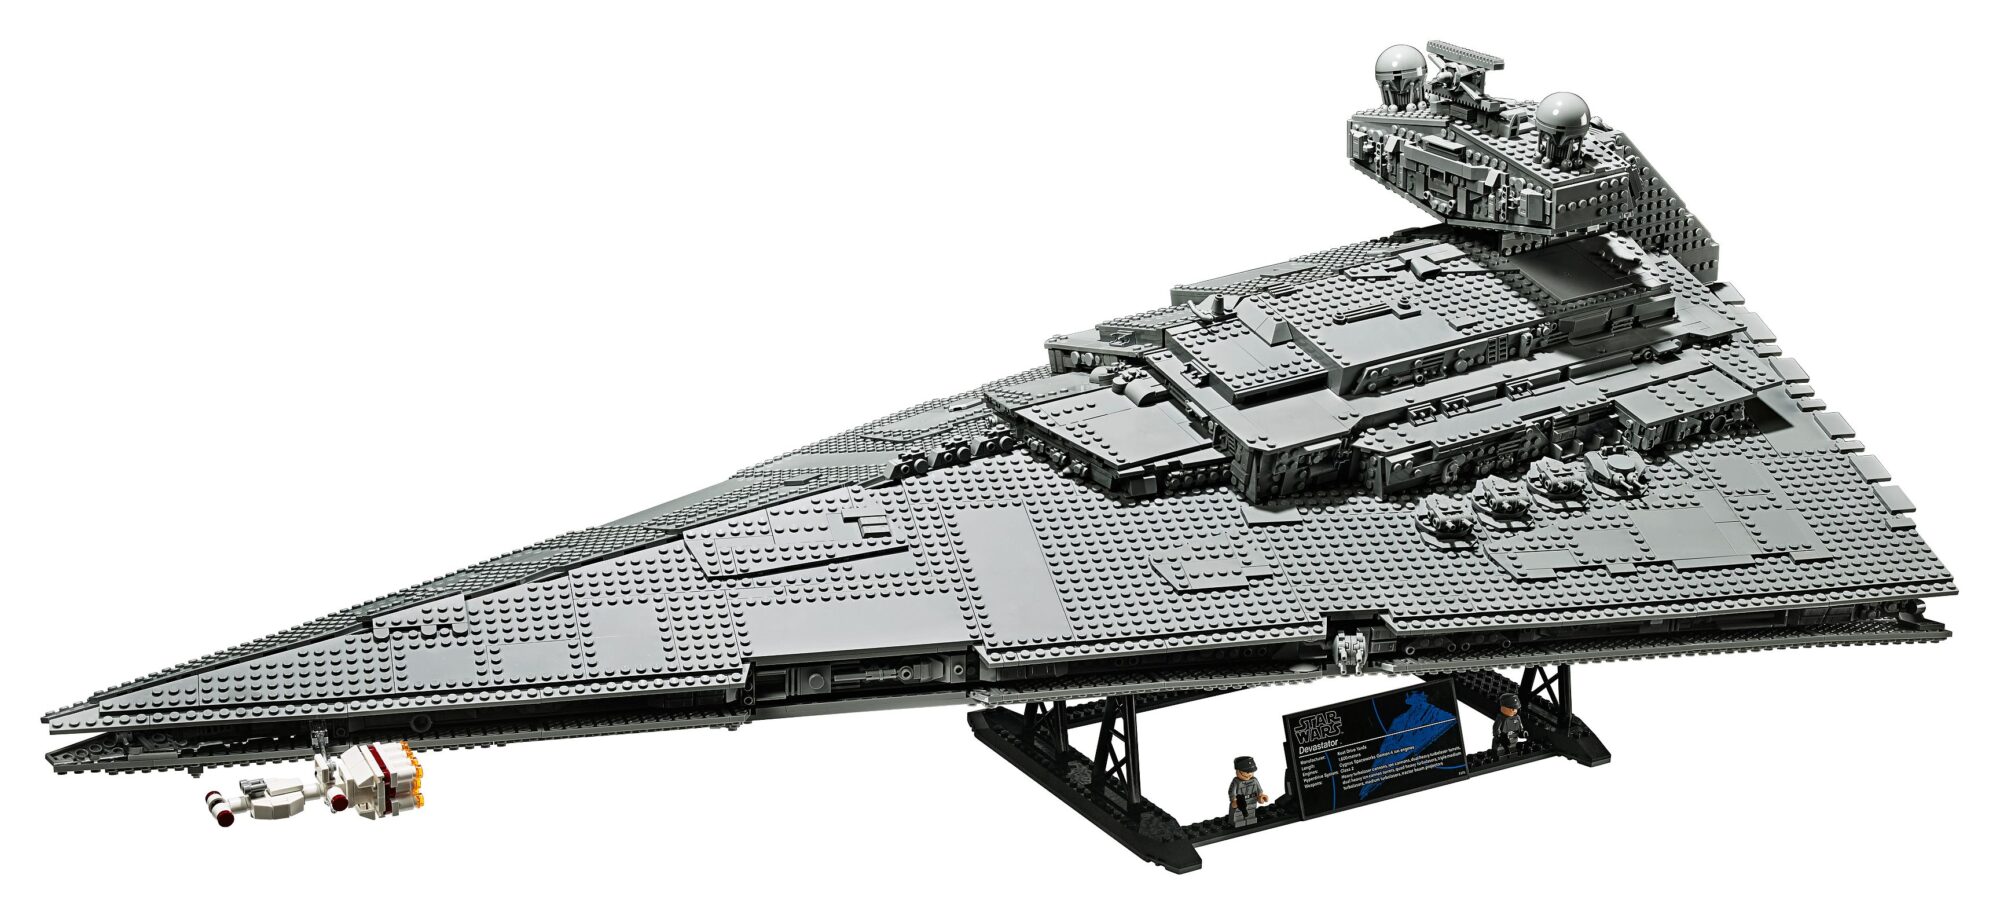 LEGO; Il nuovo set dell'Imperial Destroyer di Star Wars thumbnail